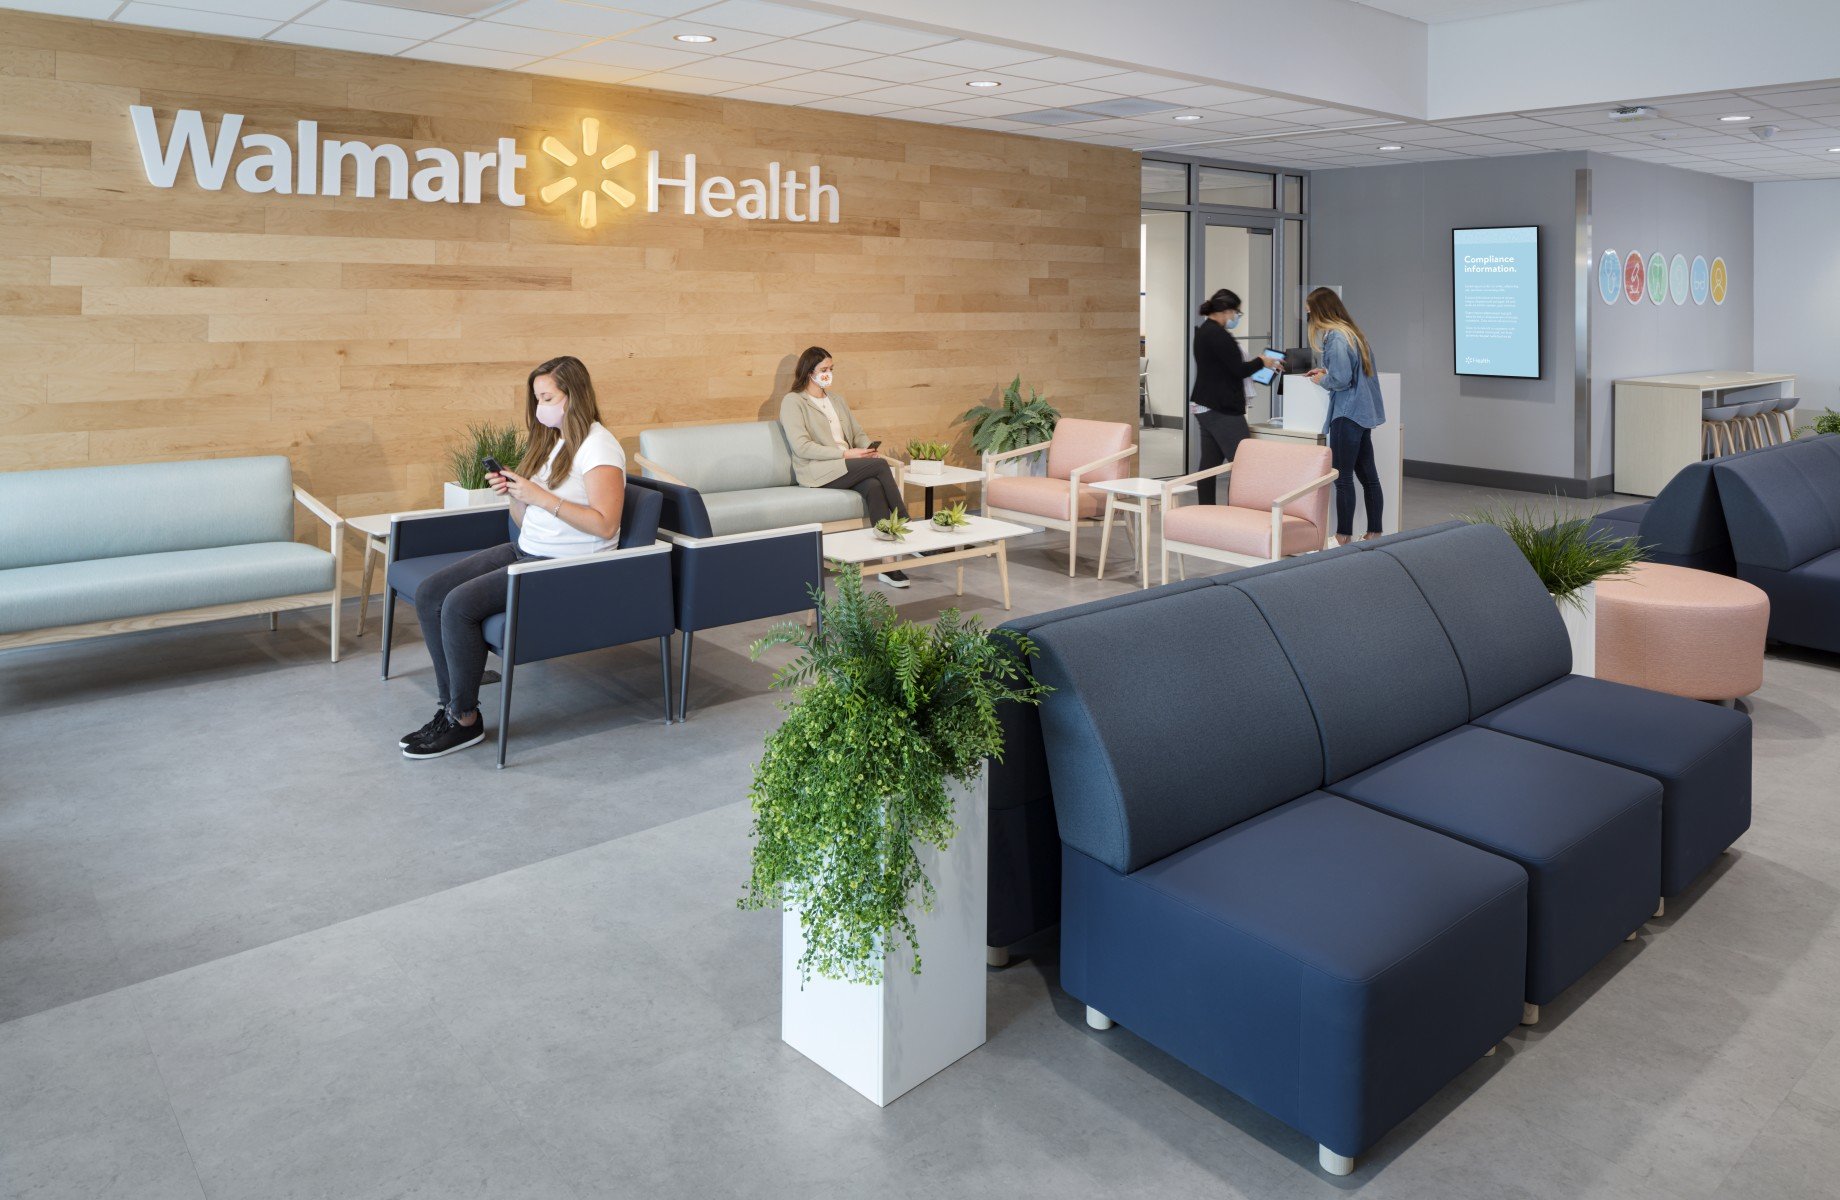 Walmart Health inks partnerships with Orlando Health, Florida insurer to streamline care coordination